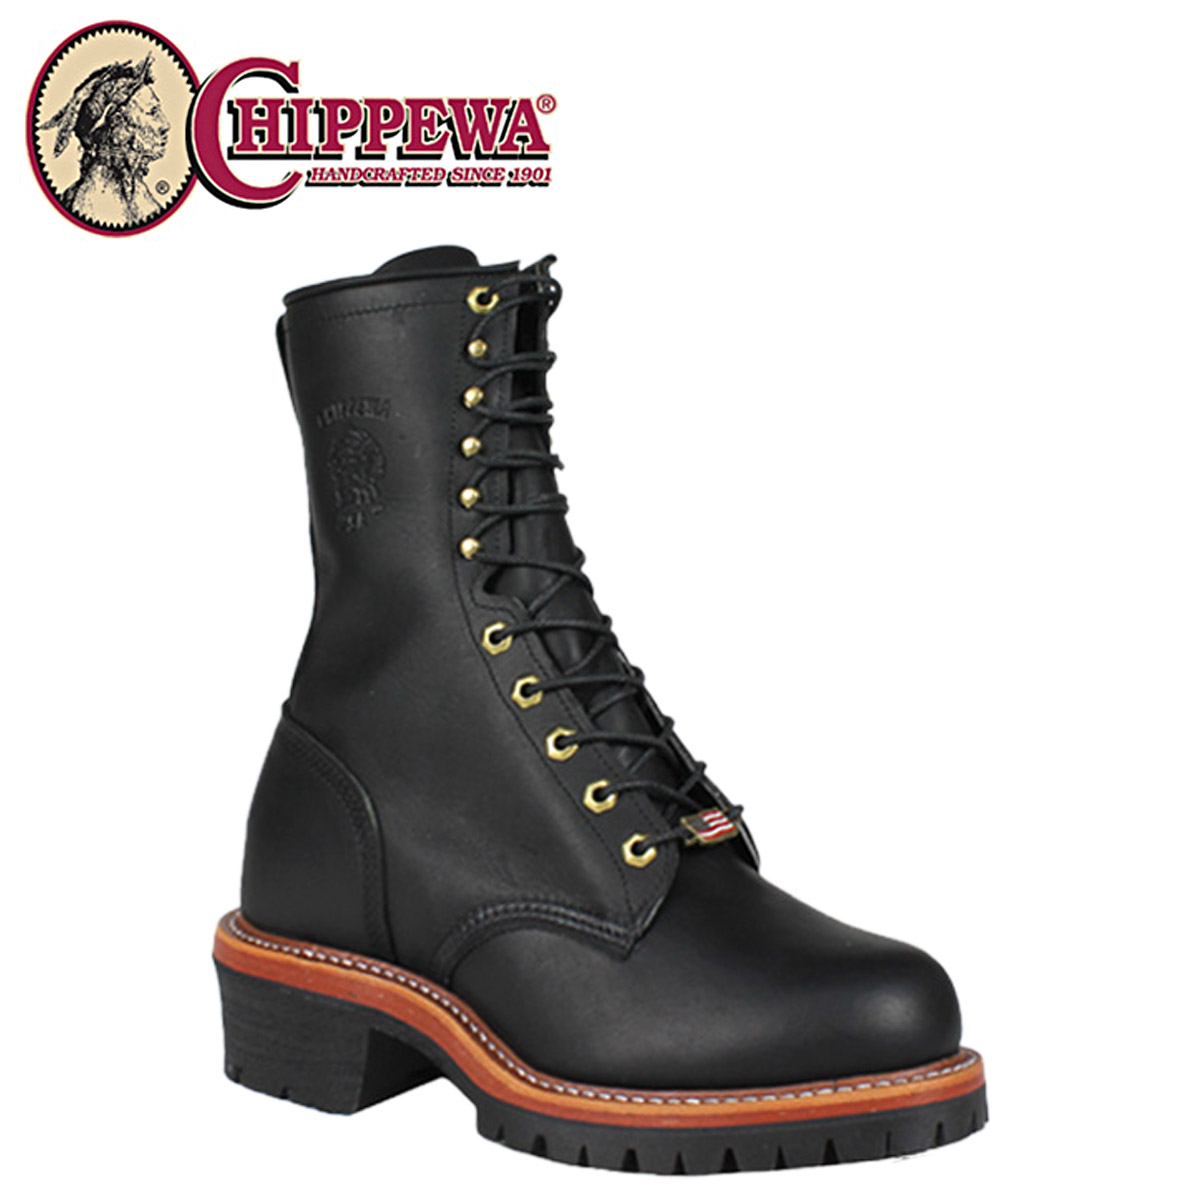 chippewa logger boots black